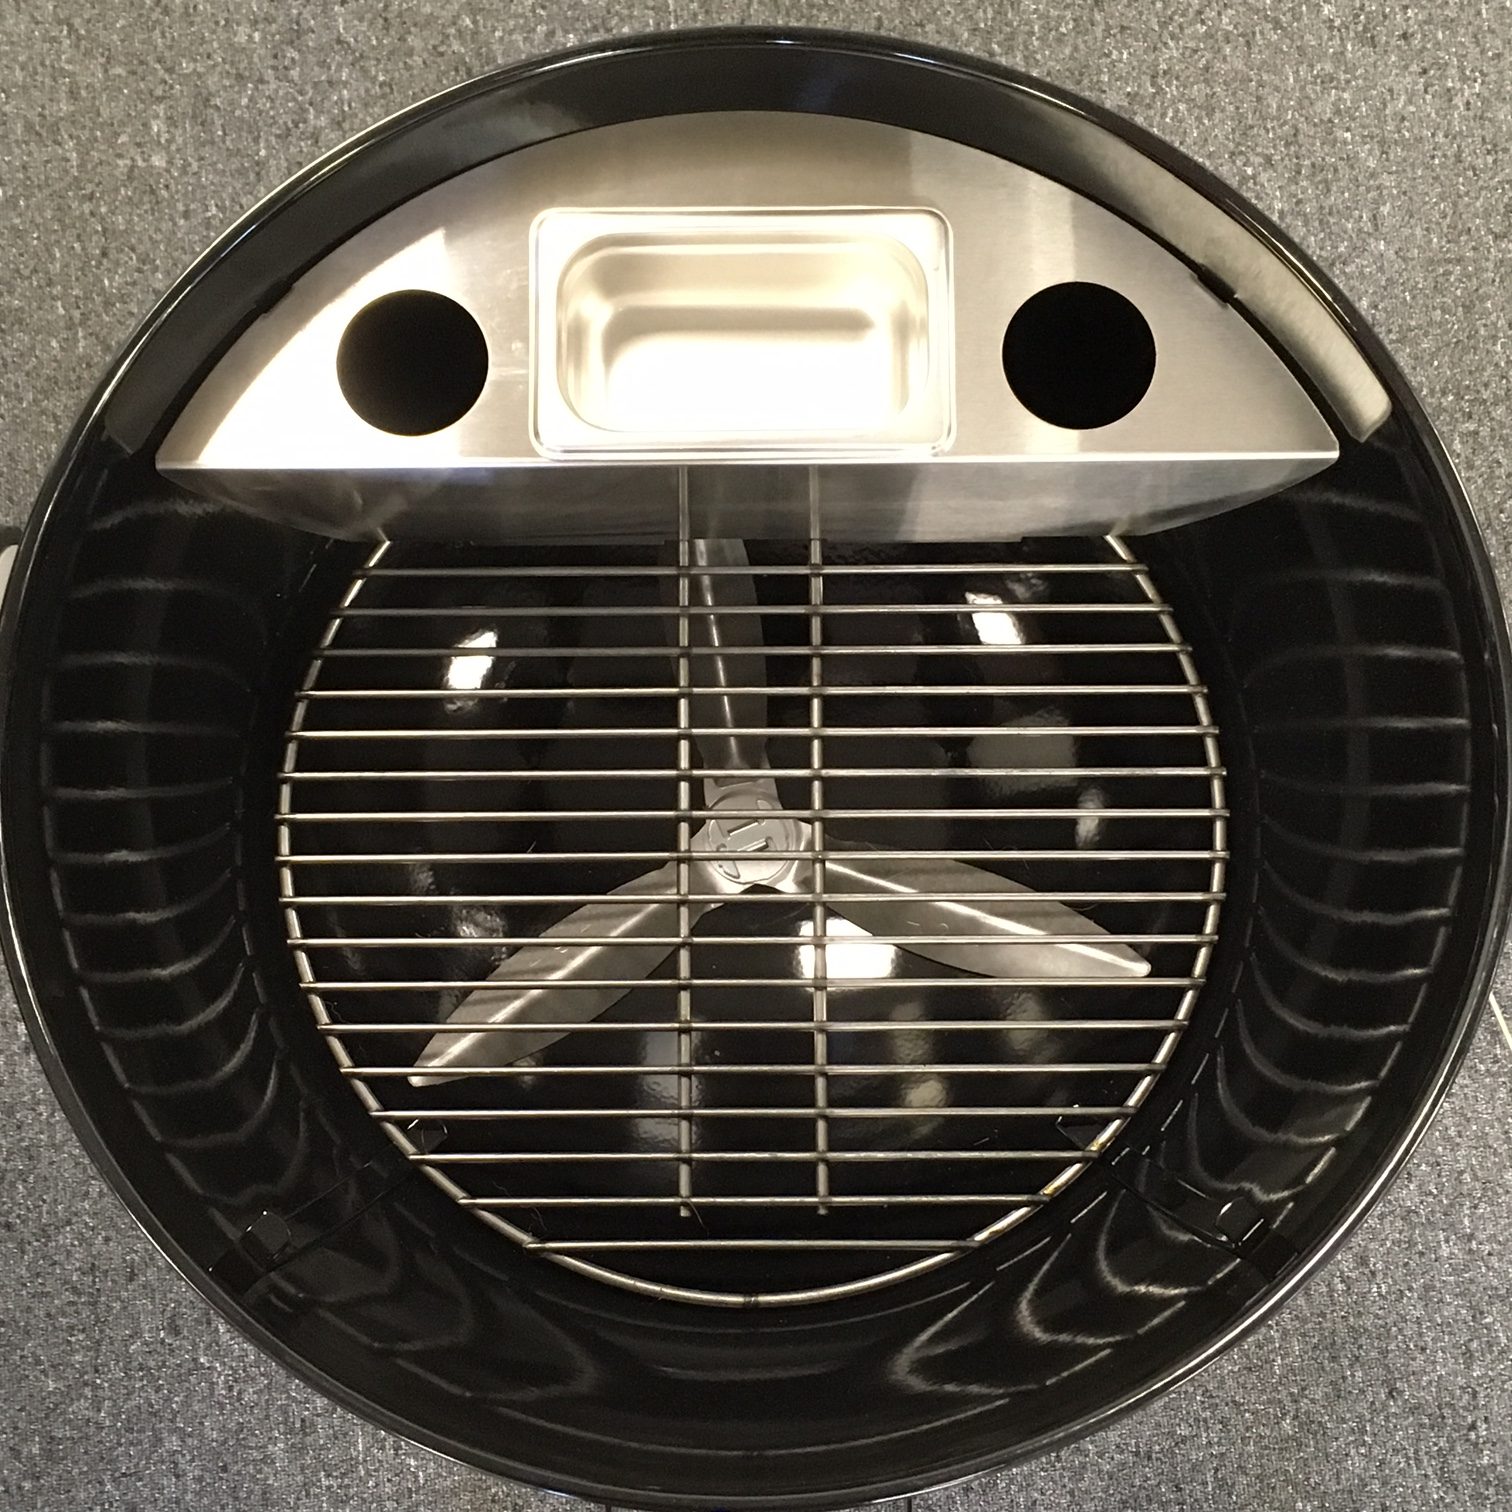 Smokenator 1000, Hovergrill + Thermometer - Smoker Kit for Weber 22 Inch  Charcoal Grills - SMOKENATOR